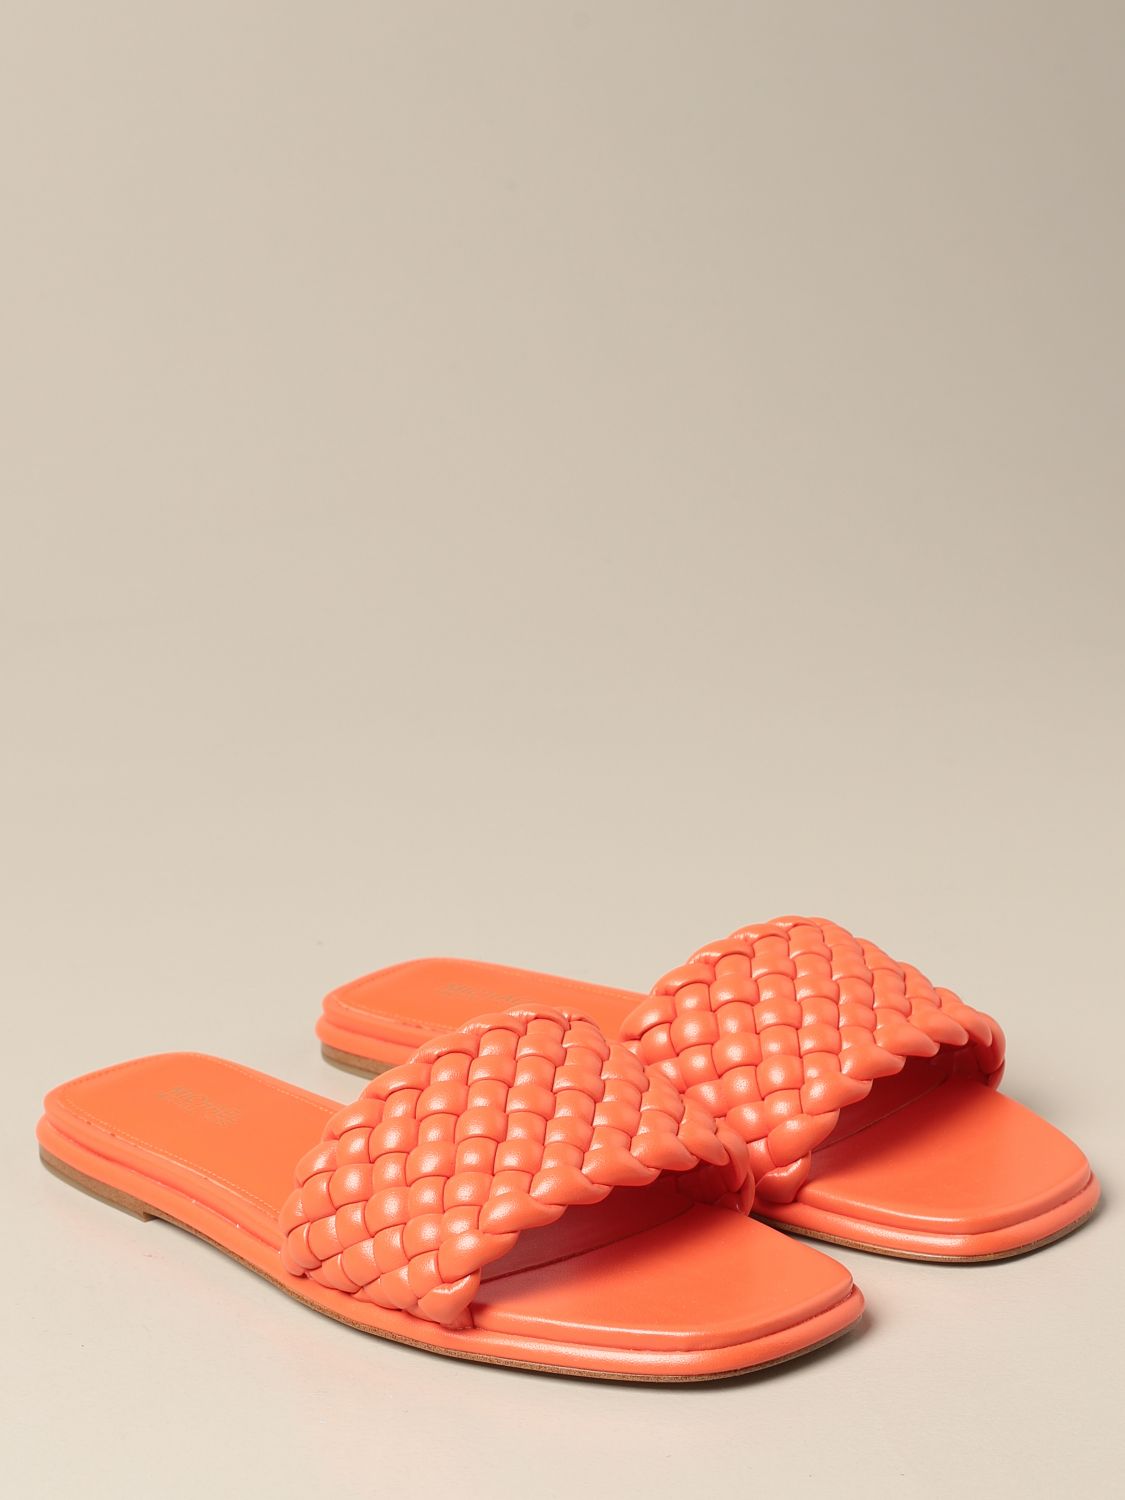 Michael Kors Orange Sandals 